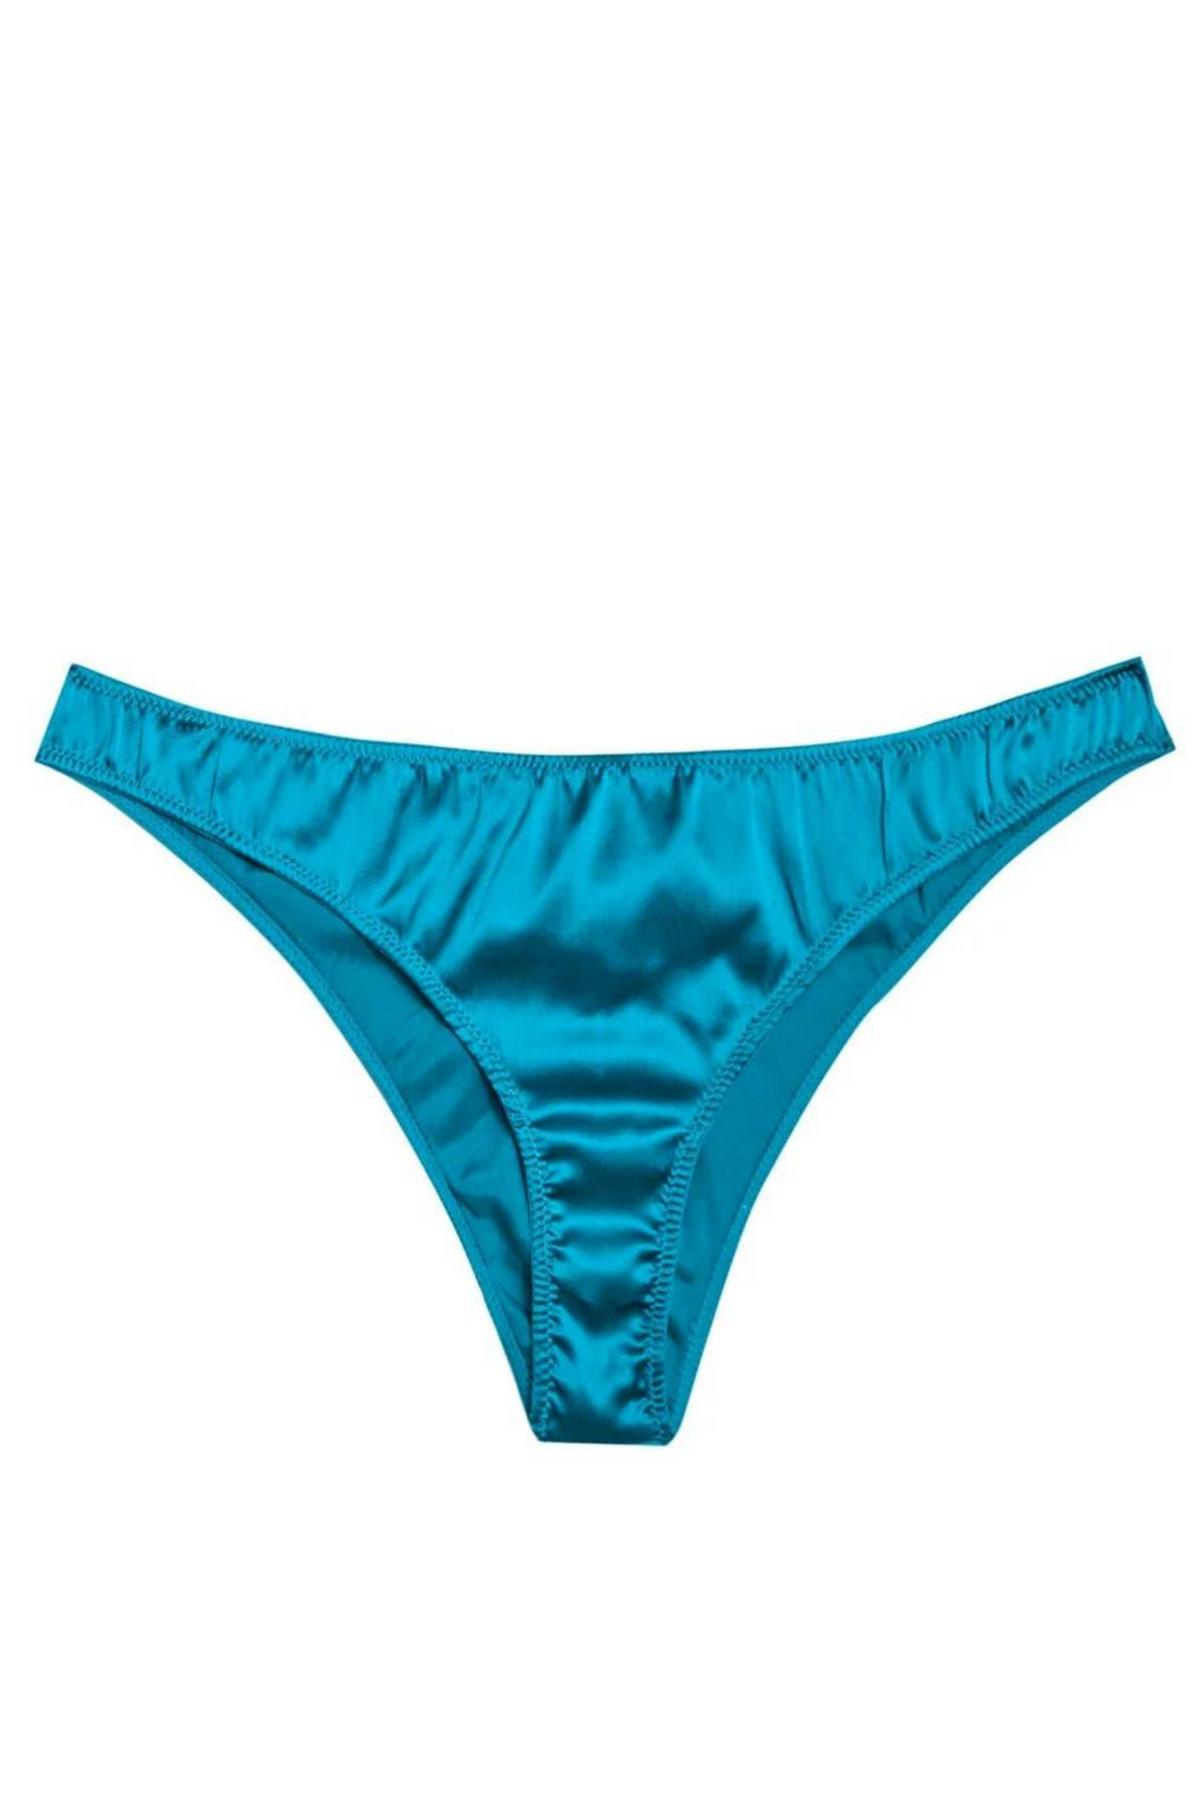 Fleur du Mal, Luxe Thong, Silk underwear, Blue lingerie